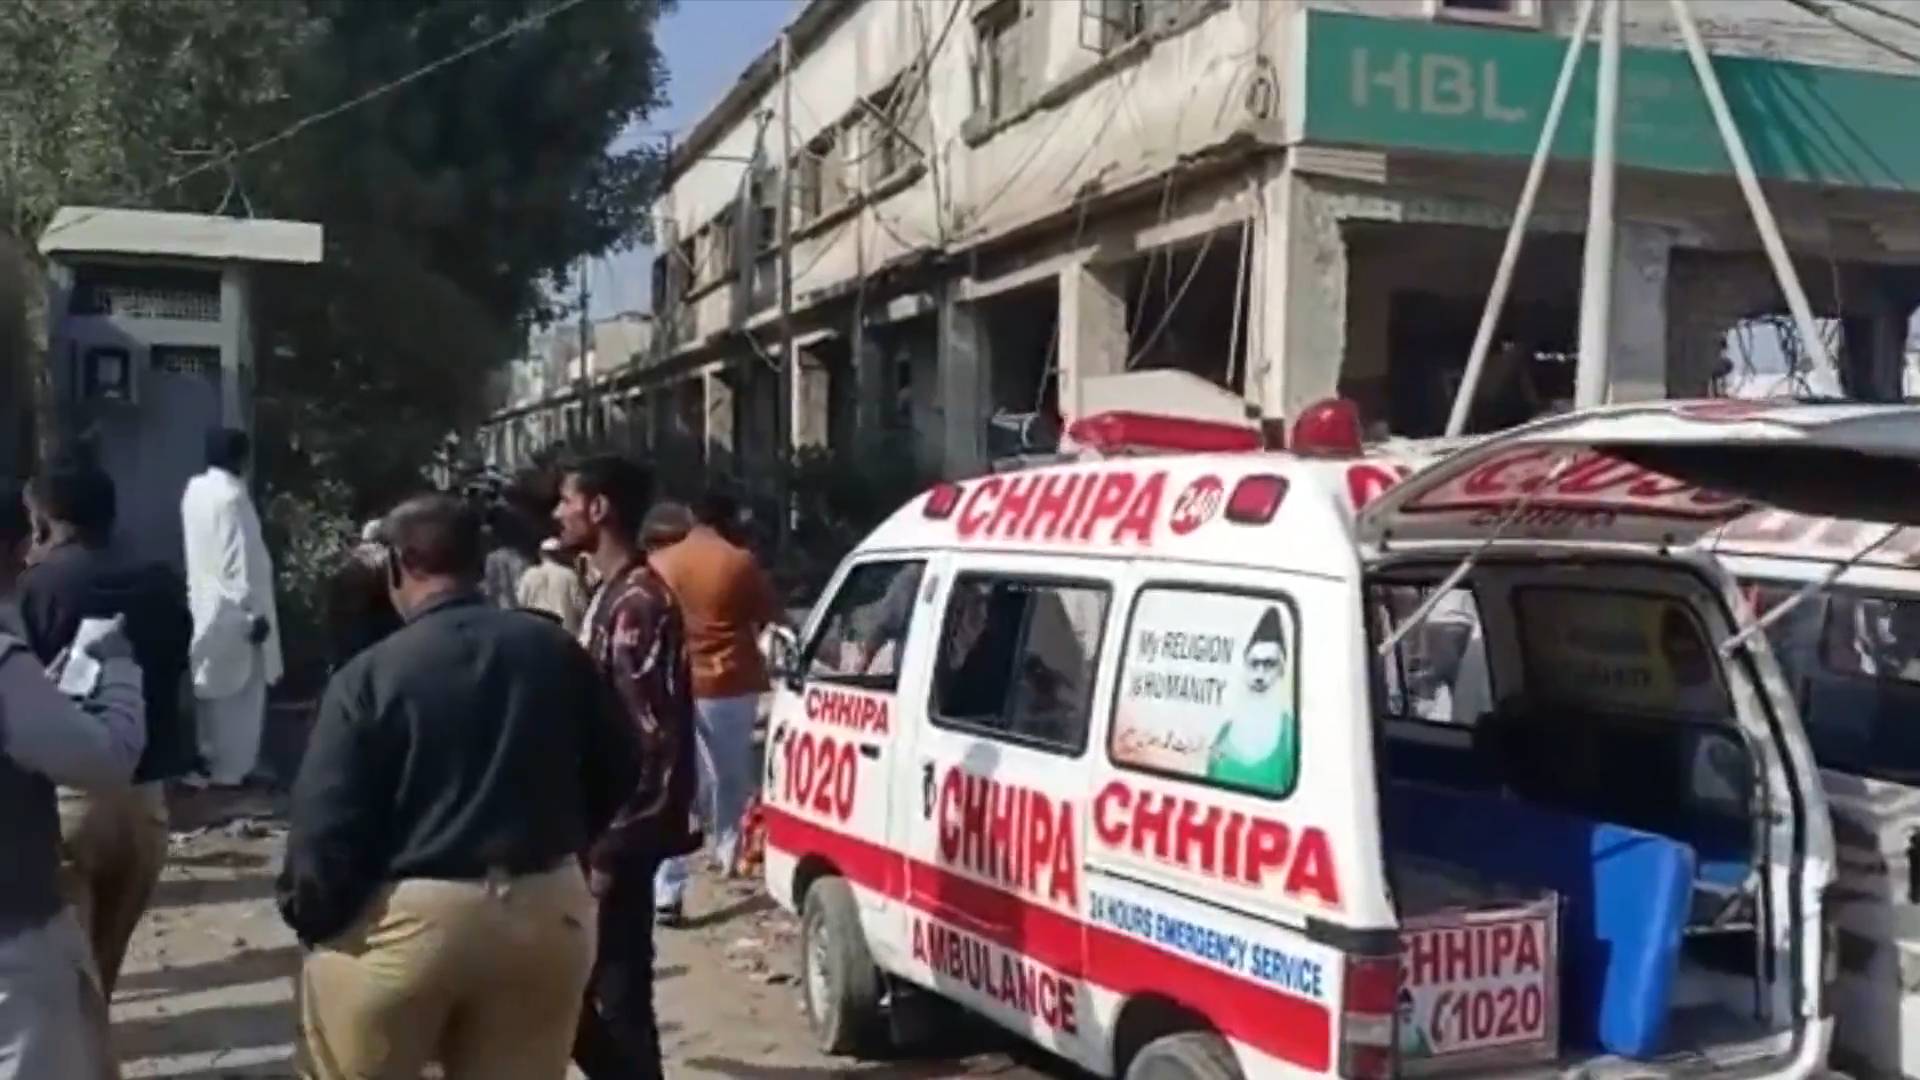 GLOBALink | 10 killed, 12 injured in explosion in Pakistan's Karachi